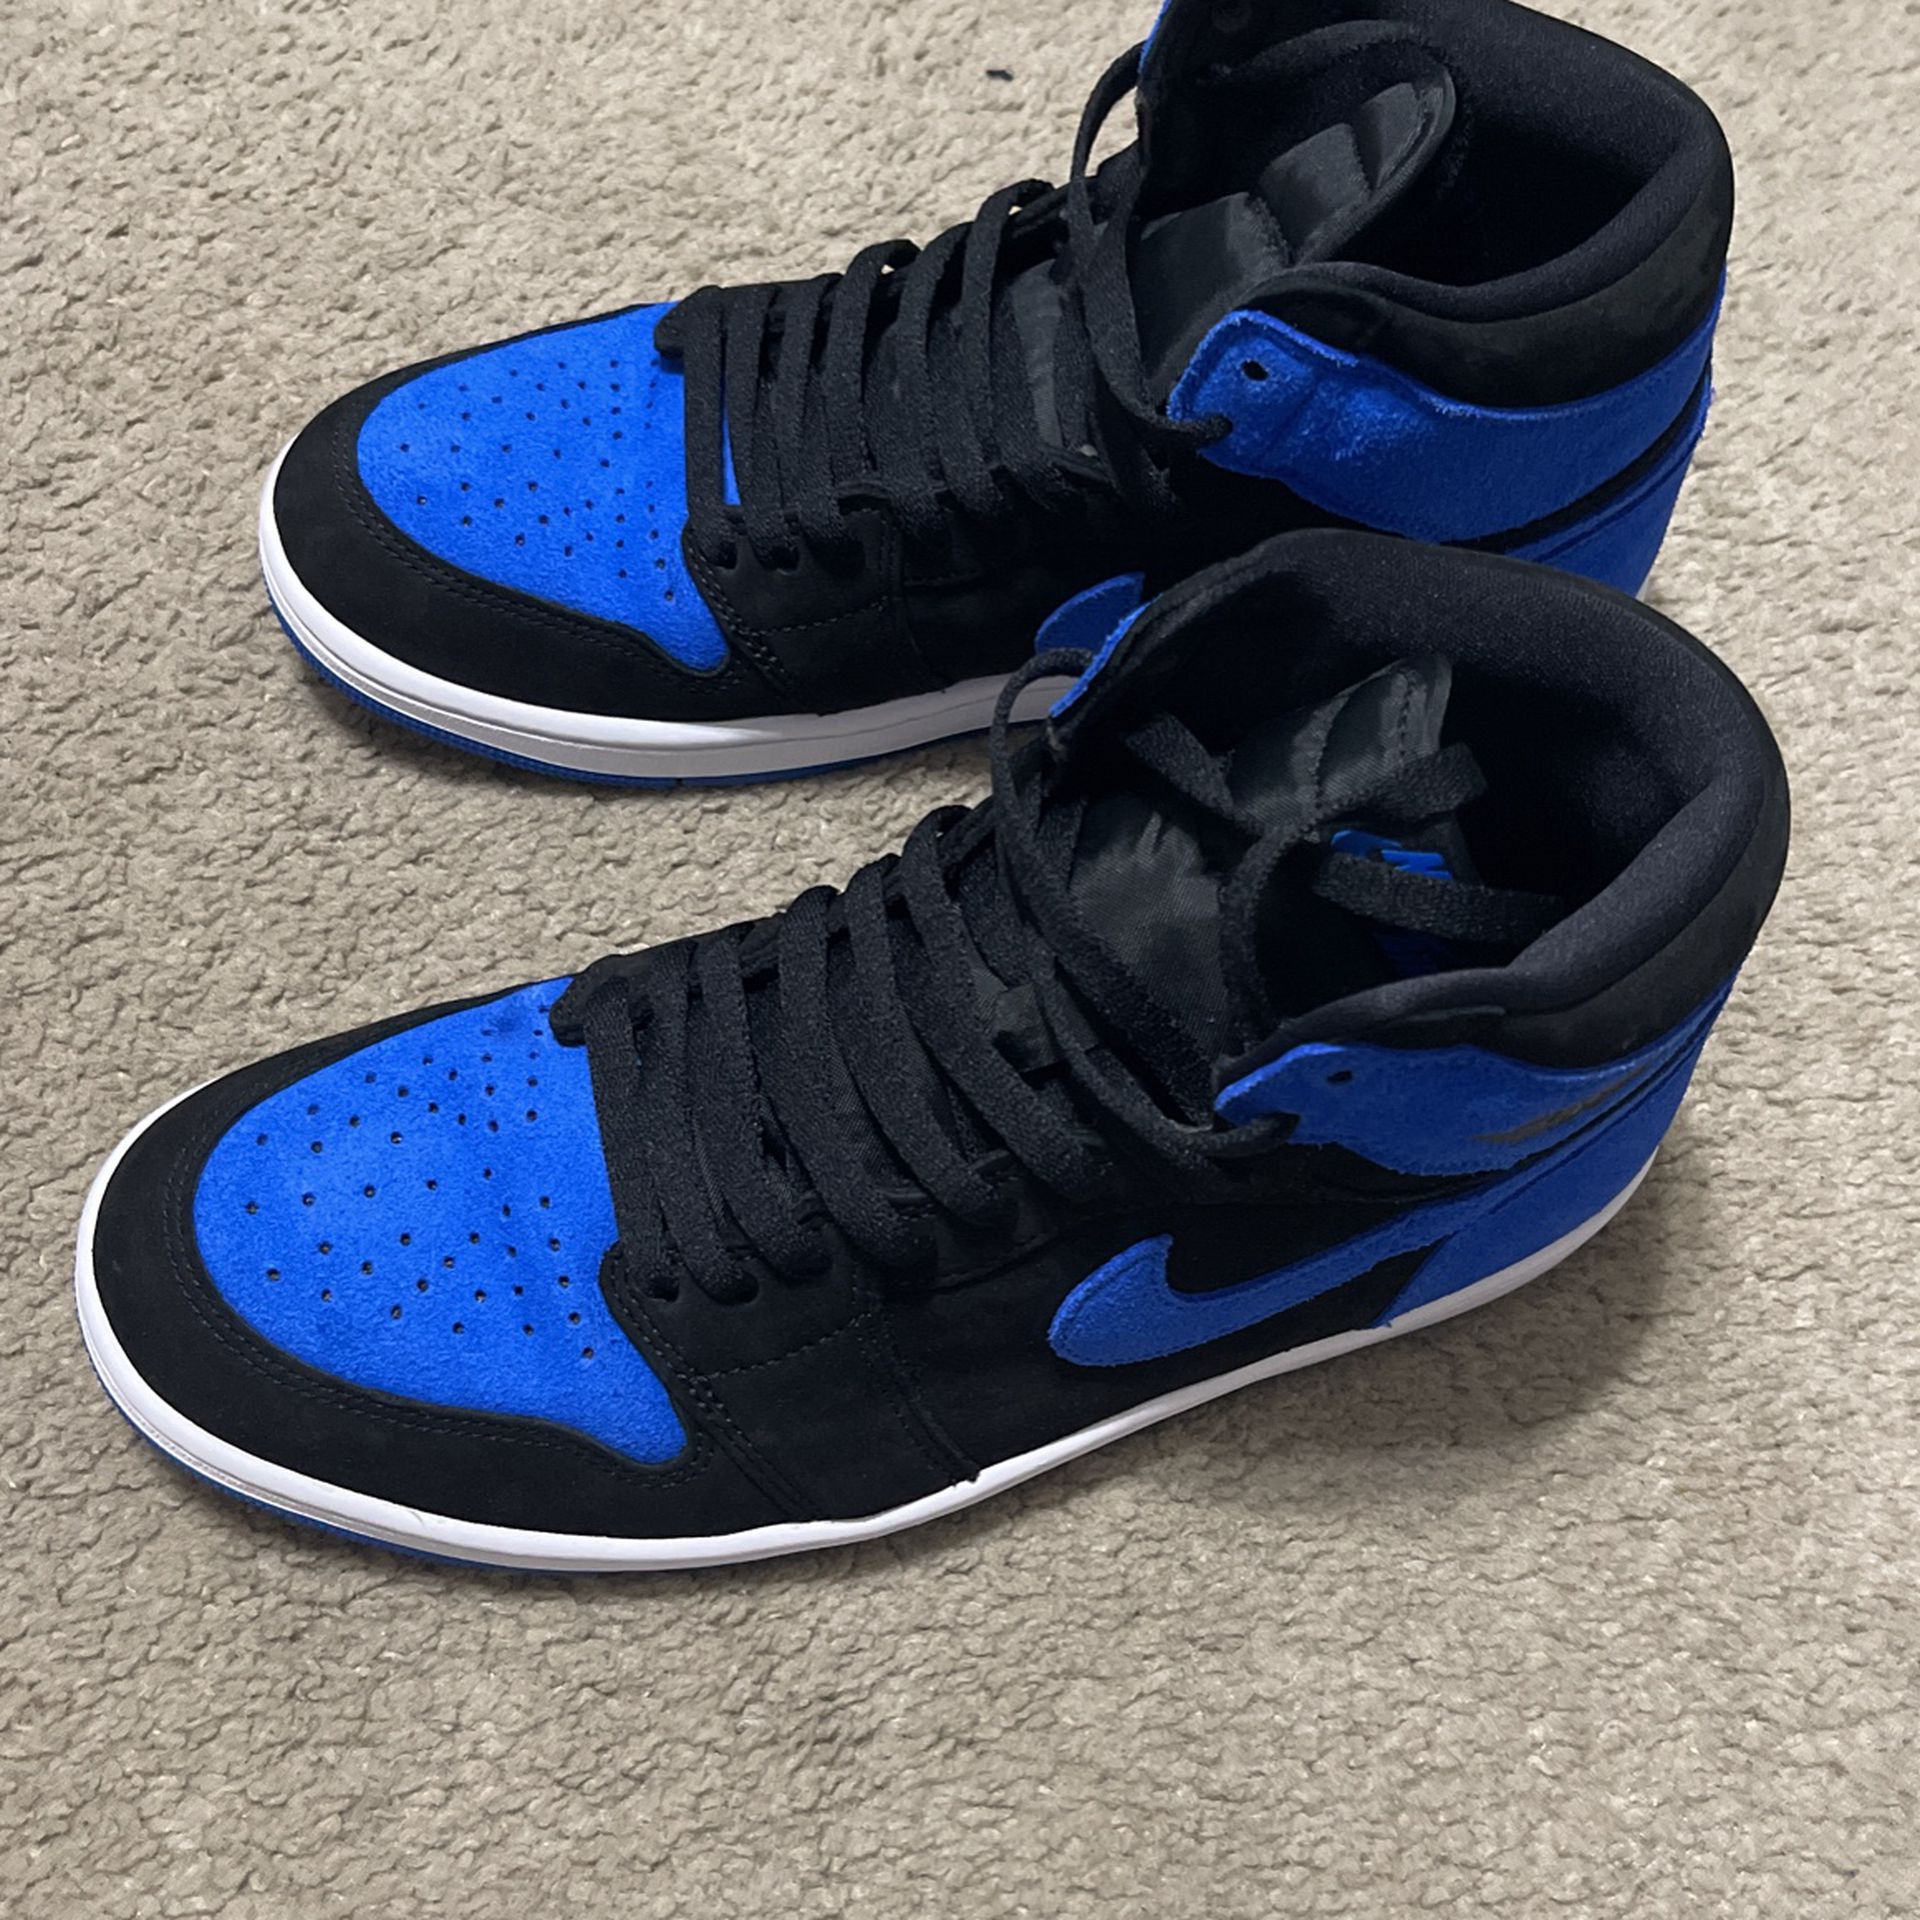 Blue Jordan 1s Size 10.5